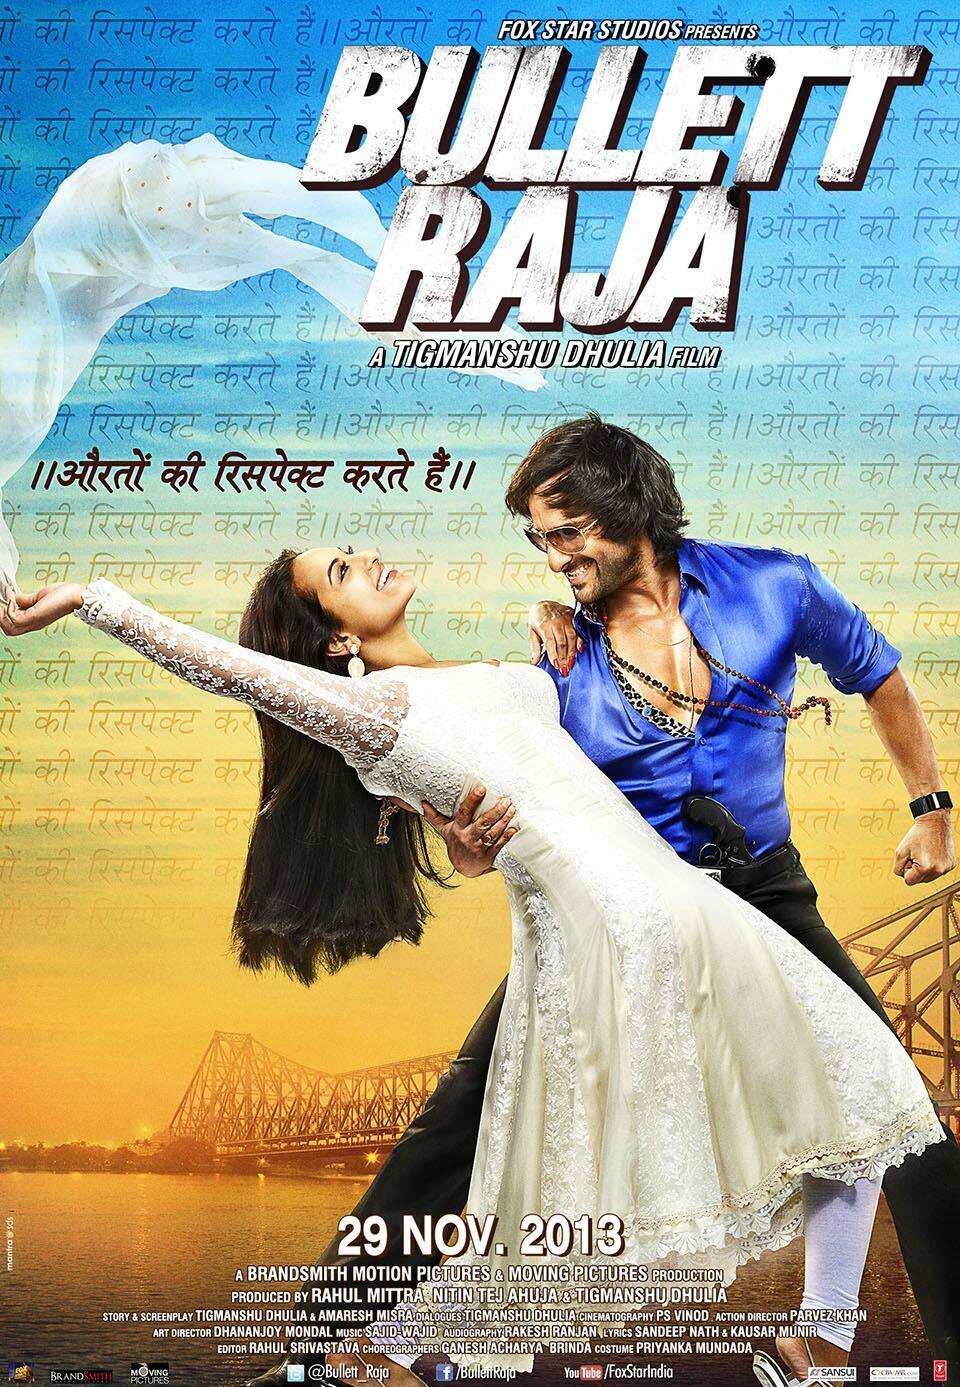 L'affiche originale du film Bullett Raja en Hindi